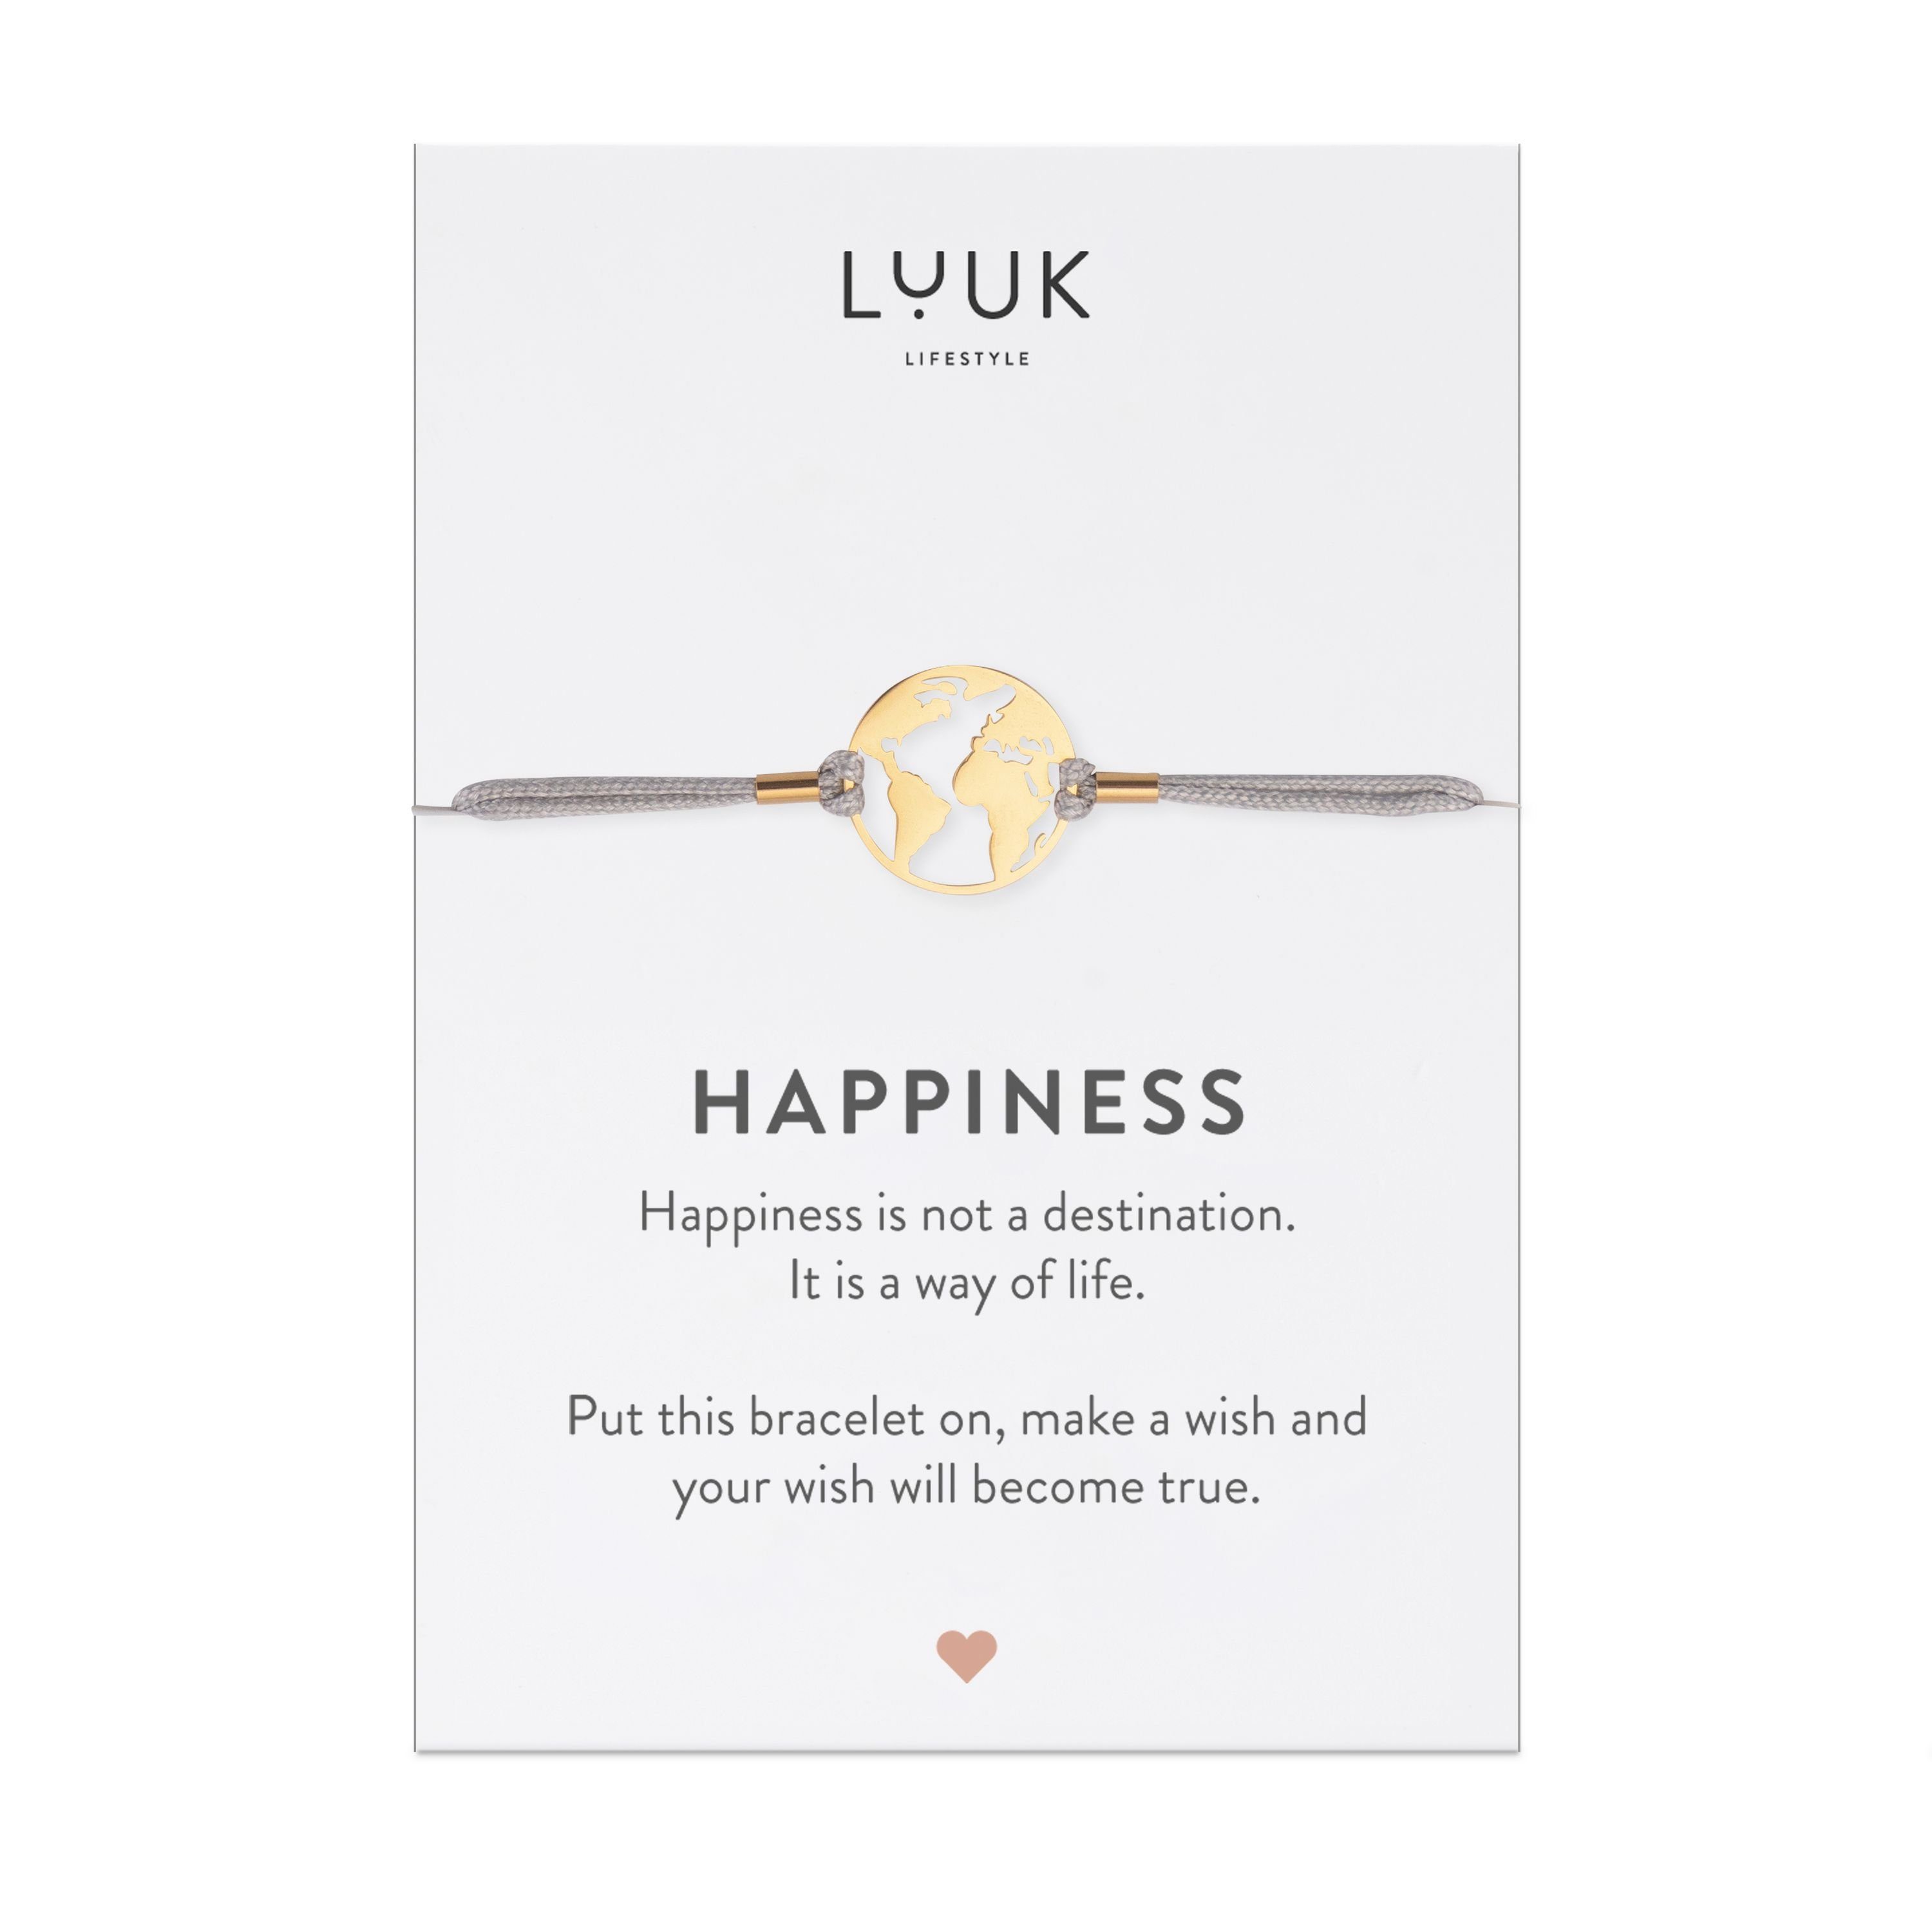 LUUK LIFESTYLE Freundschaftsarmband Weltkugel, handmade, mit Happiness Spruchkarte Gold